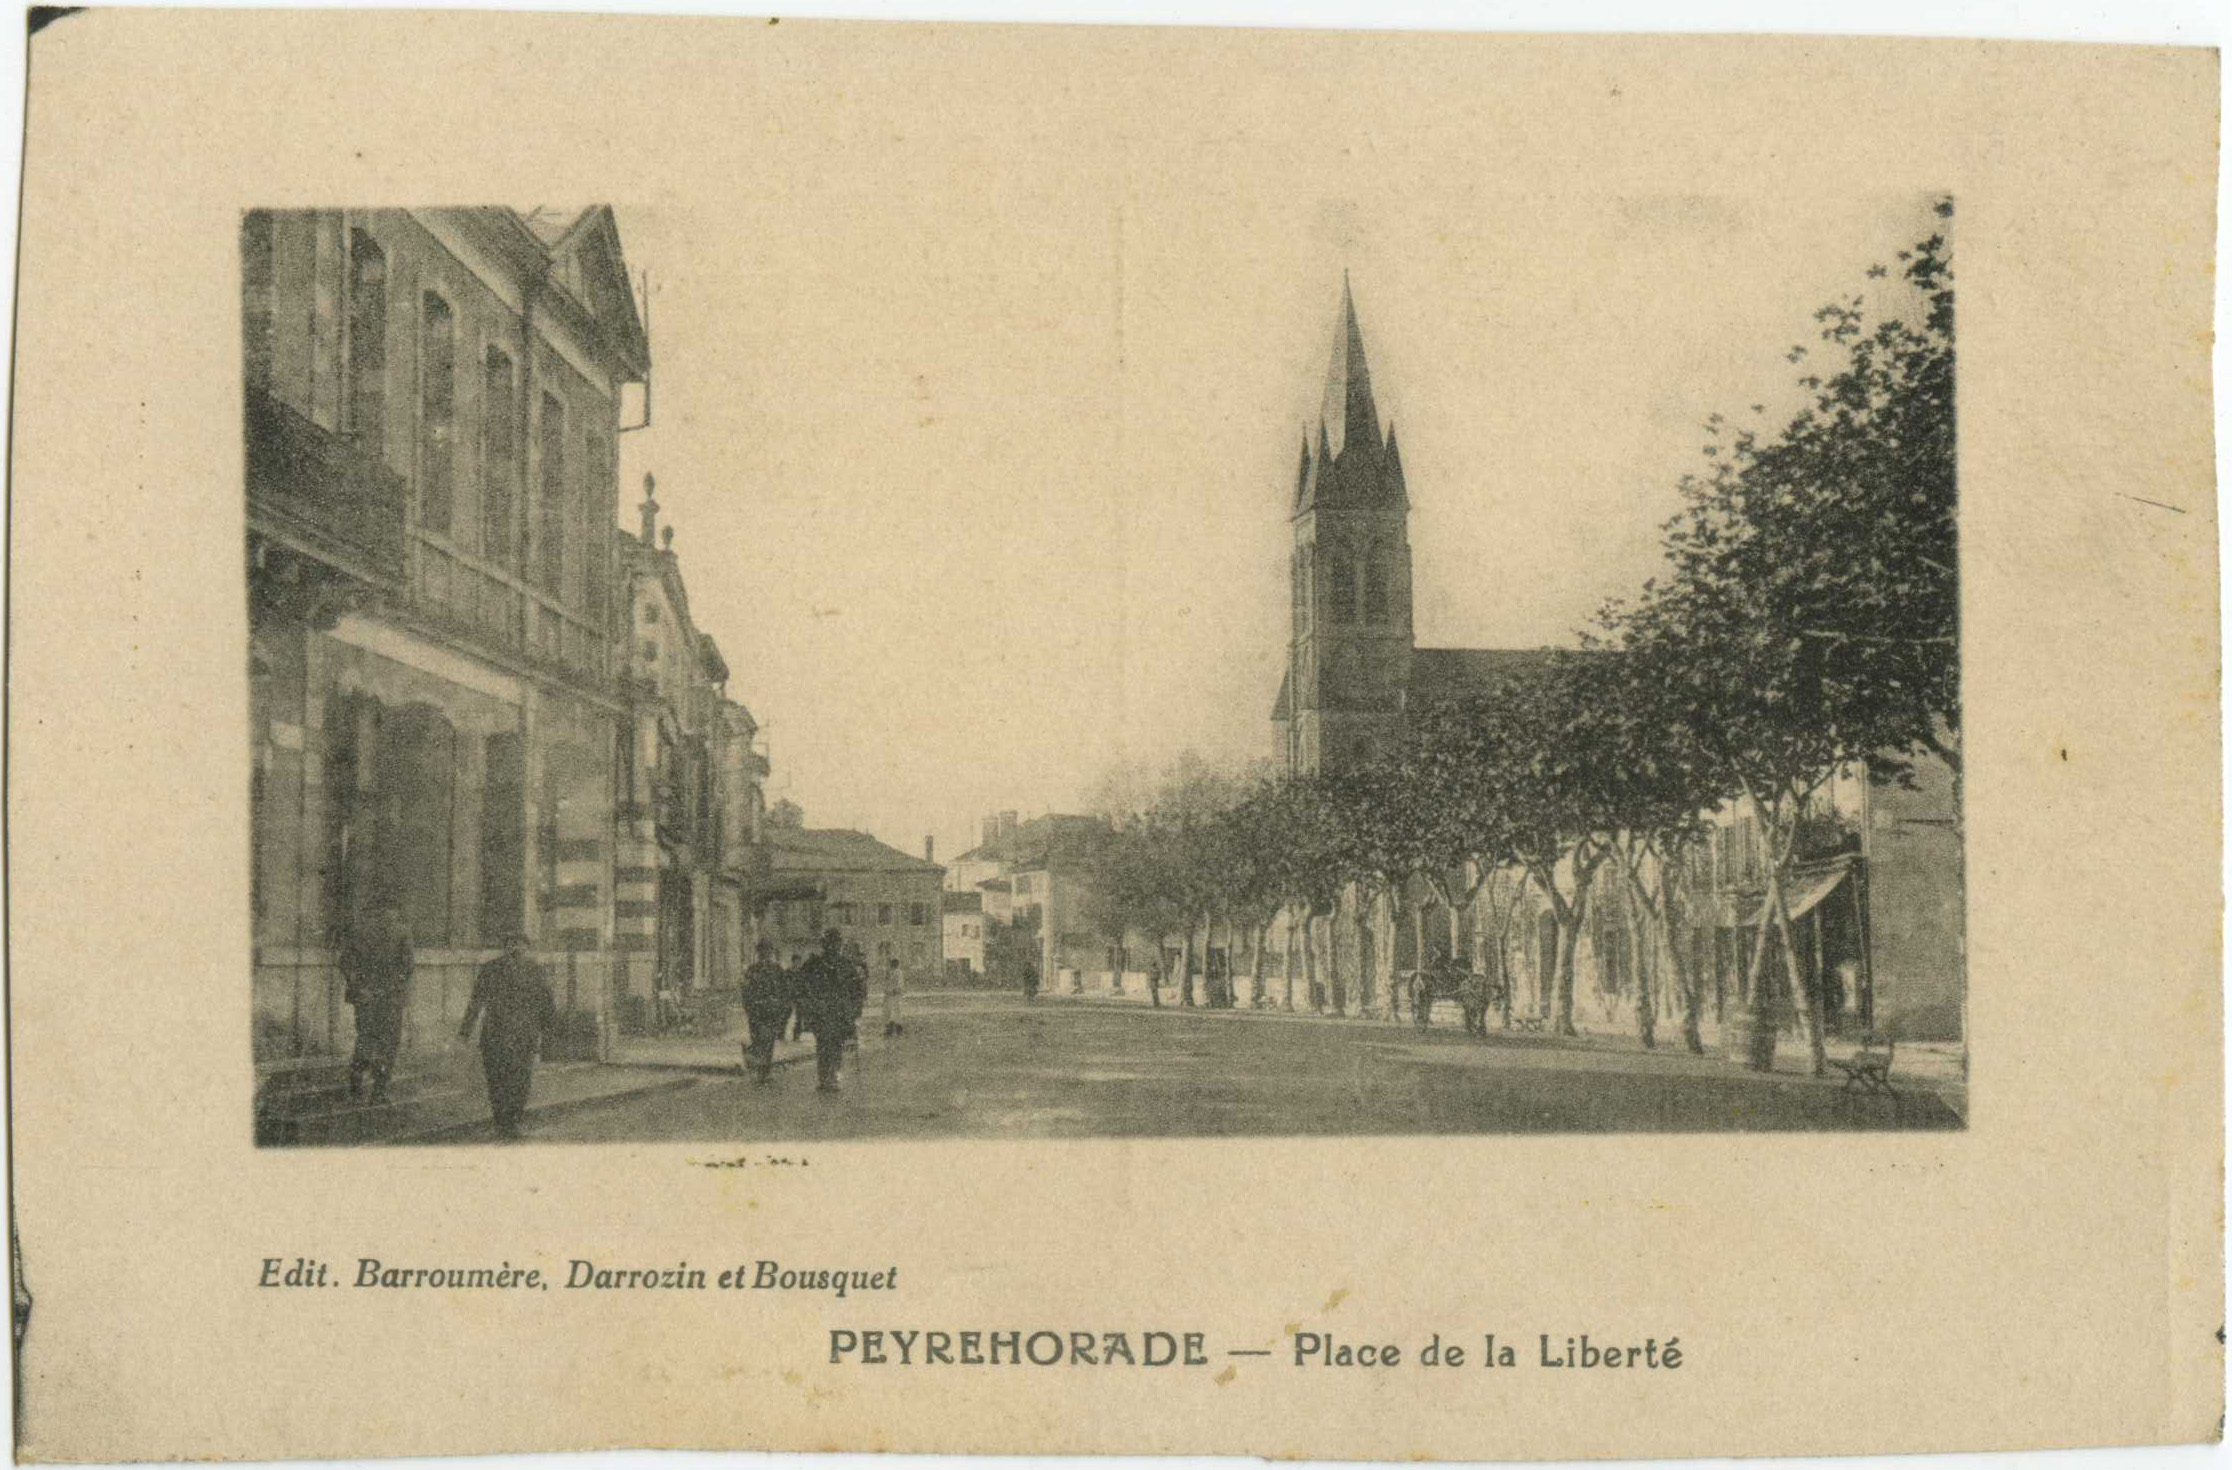 Peyrehorade - Place de la Liberté